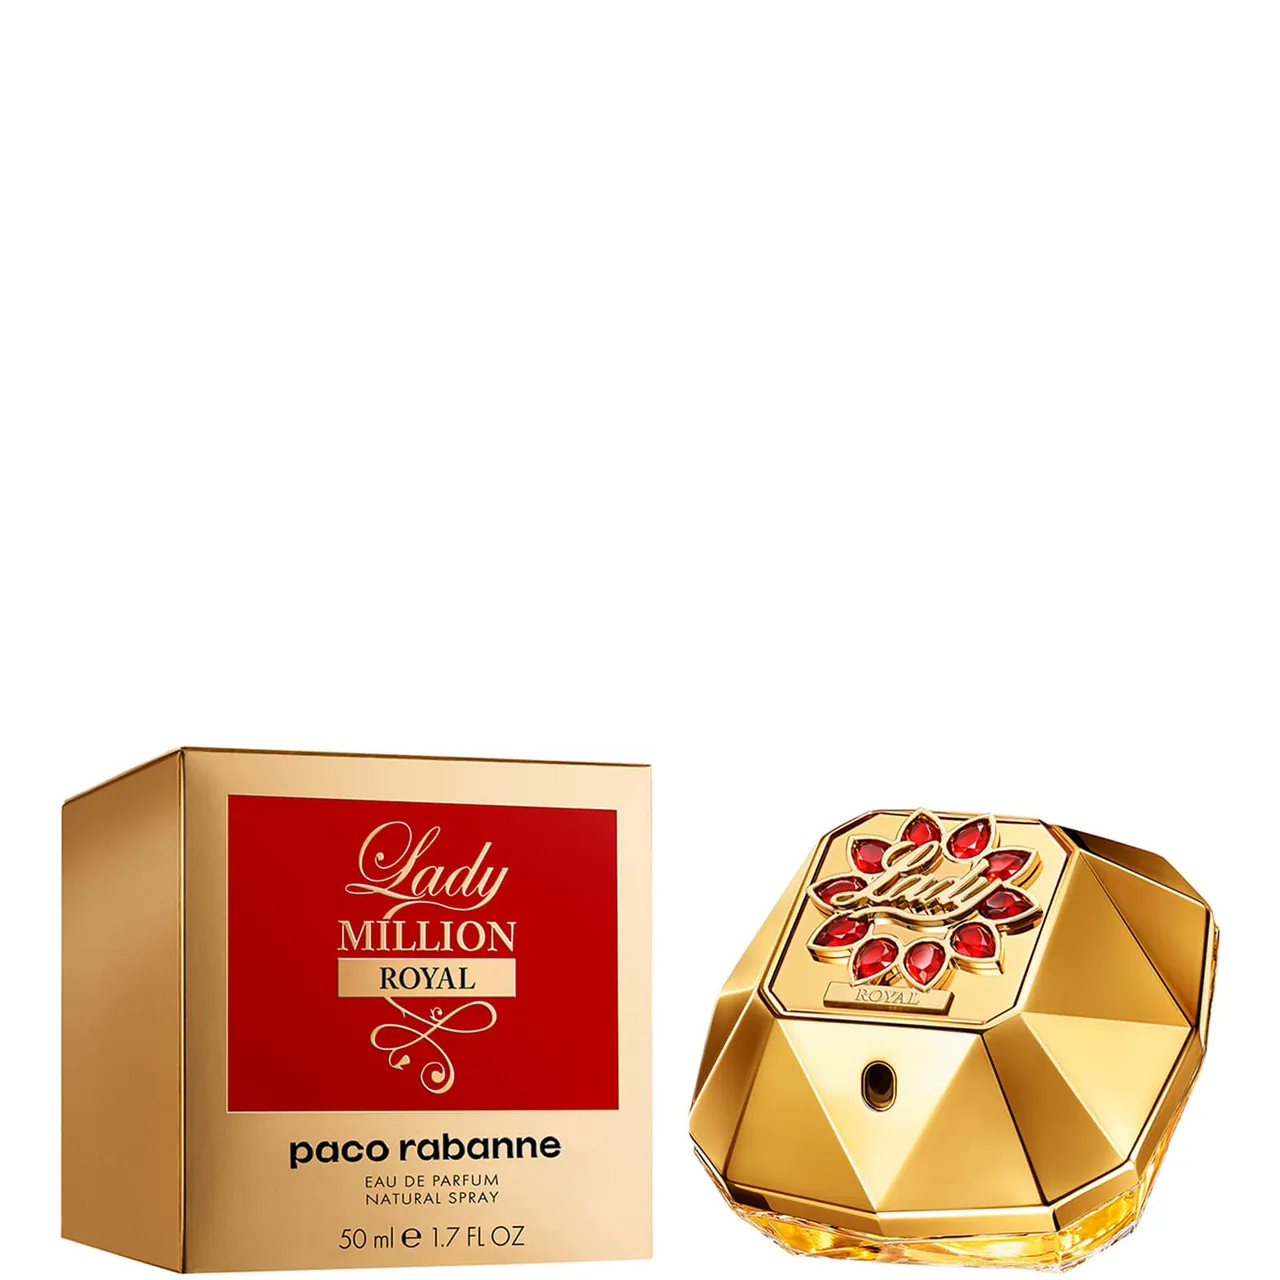 Paco Rabanne Lady Million Royal Parfum 50ml